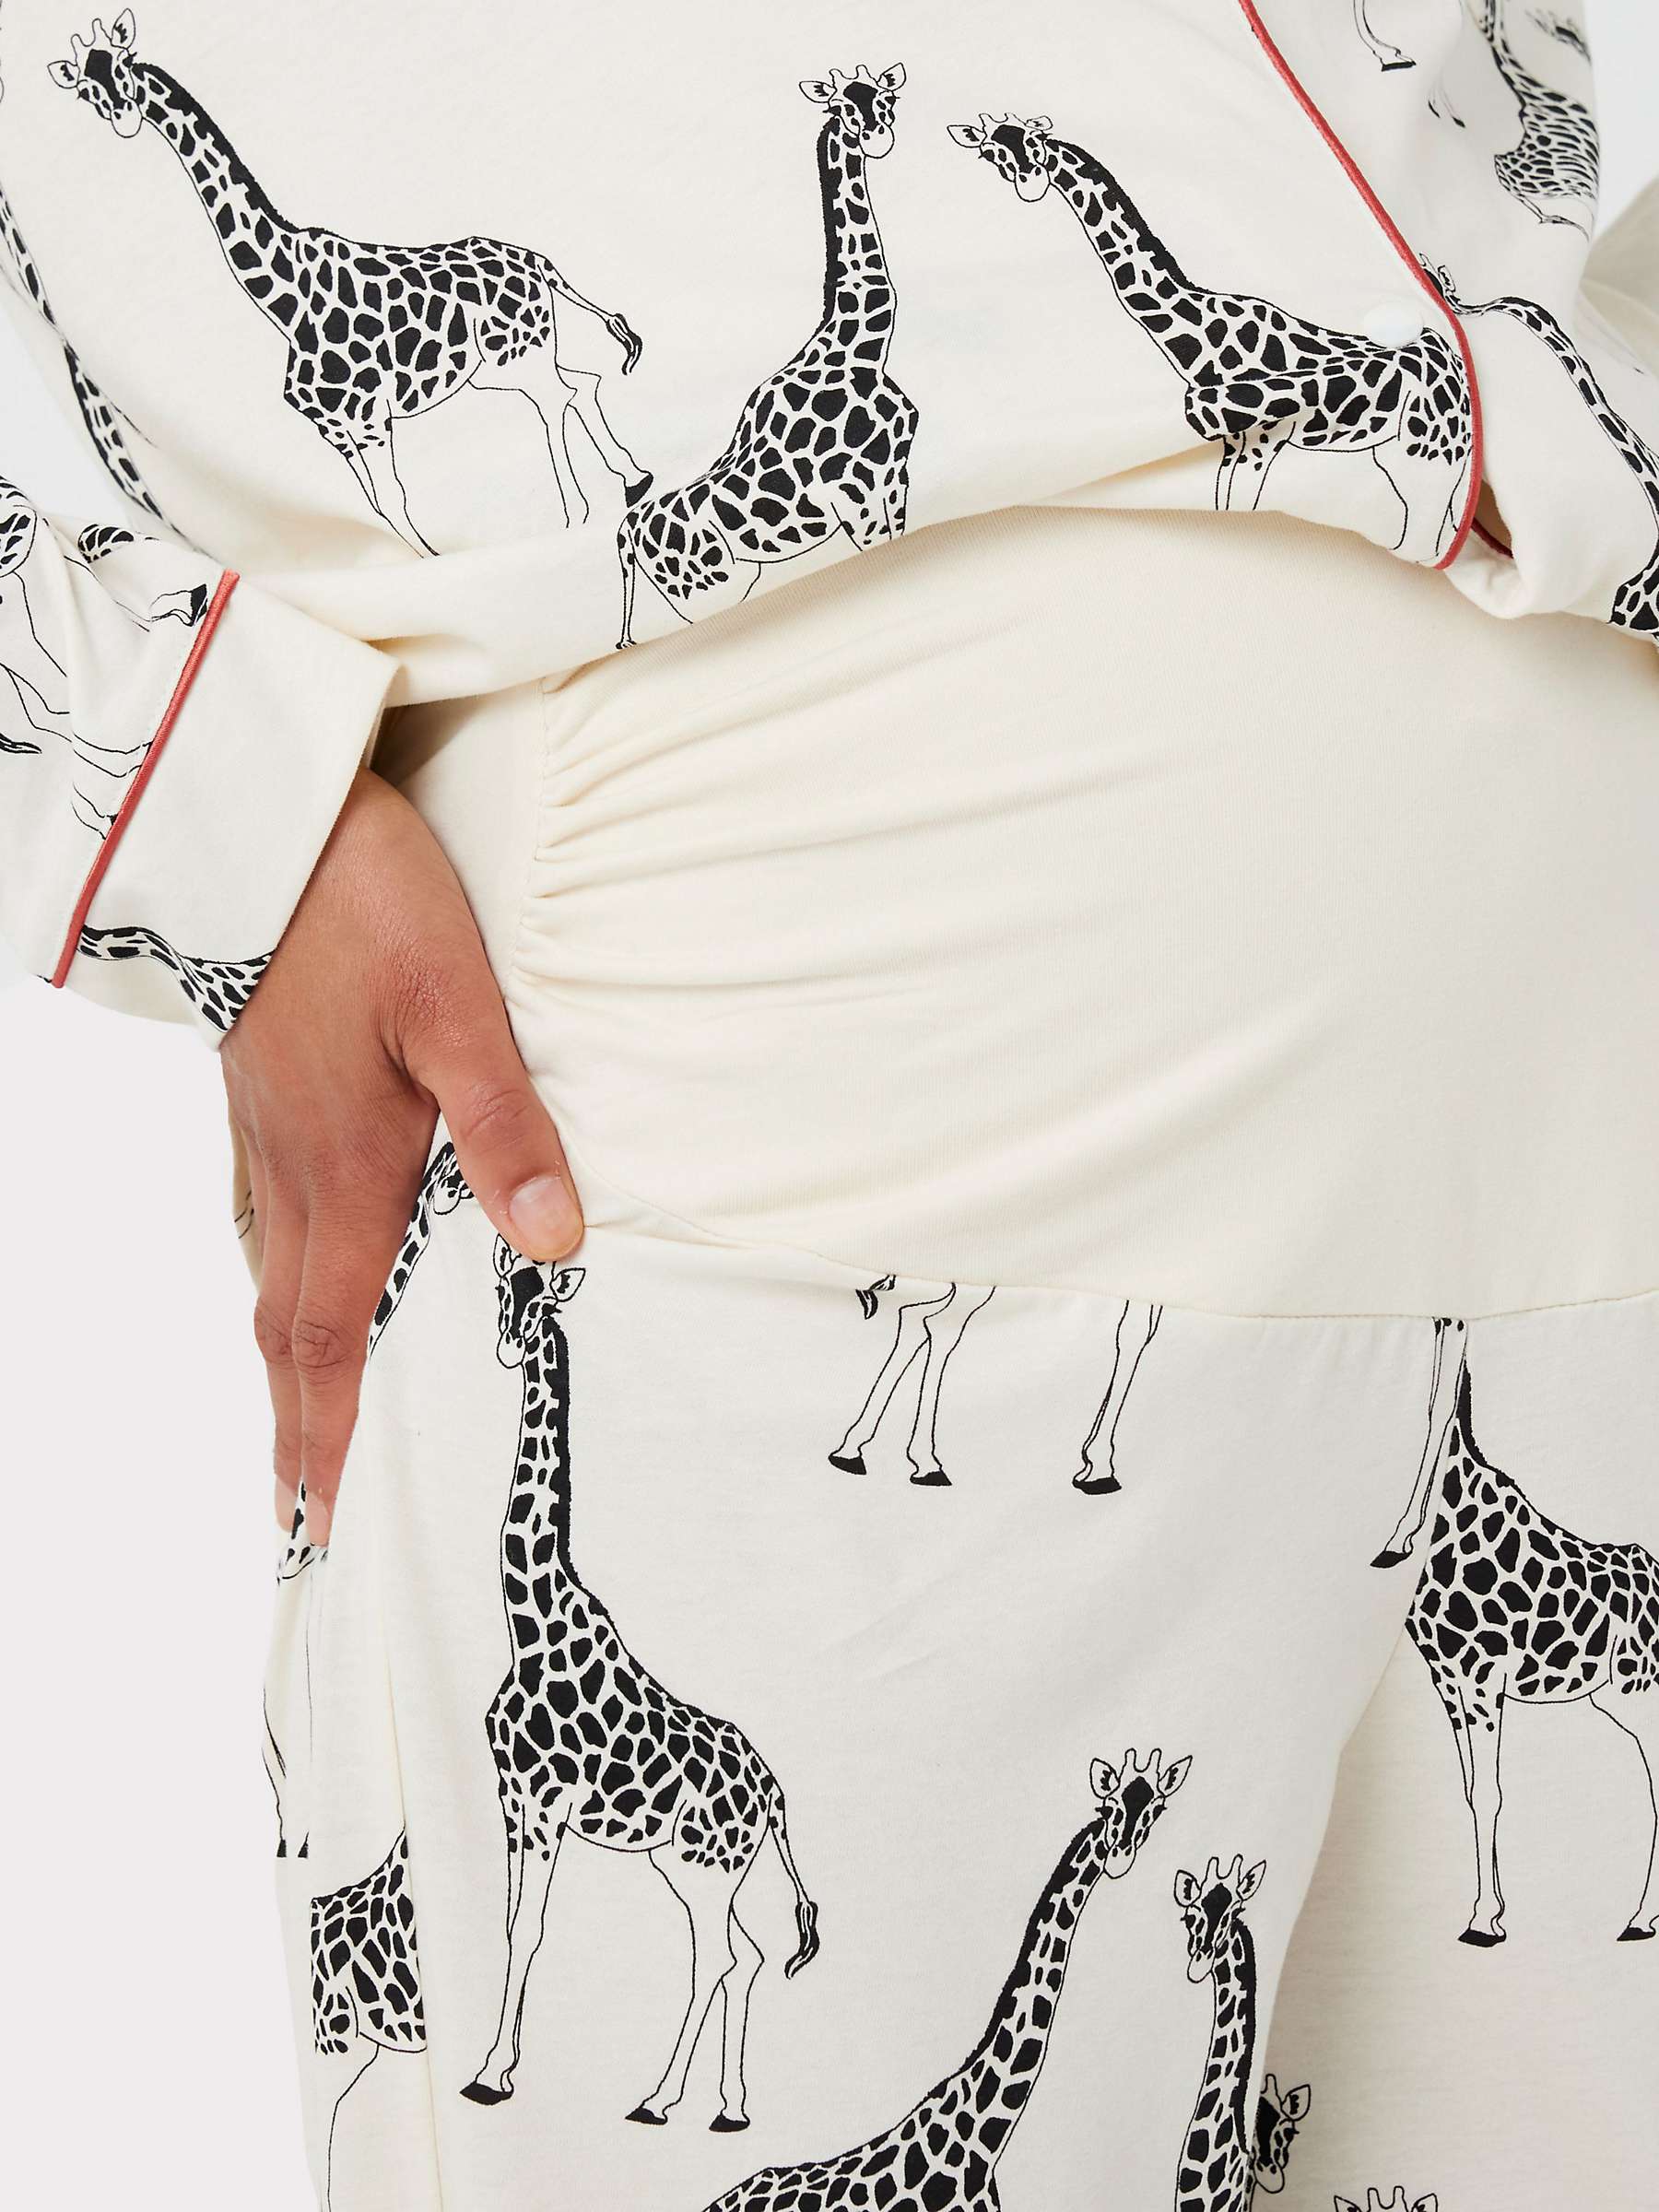 Buy Chelsea Peers Giraffe Long Shirt Organic Cotton Maternity Pyjama Set, Off White Online at johnlewis.com